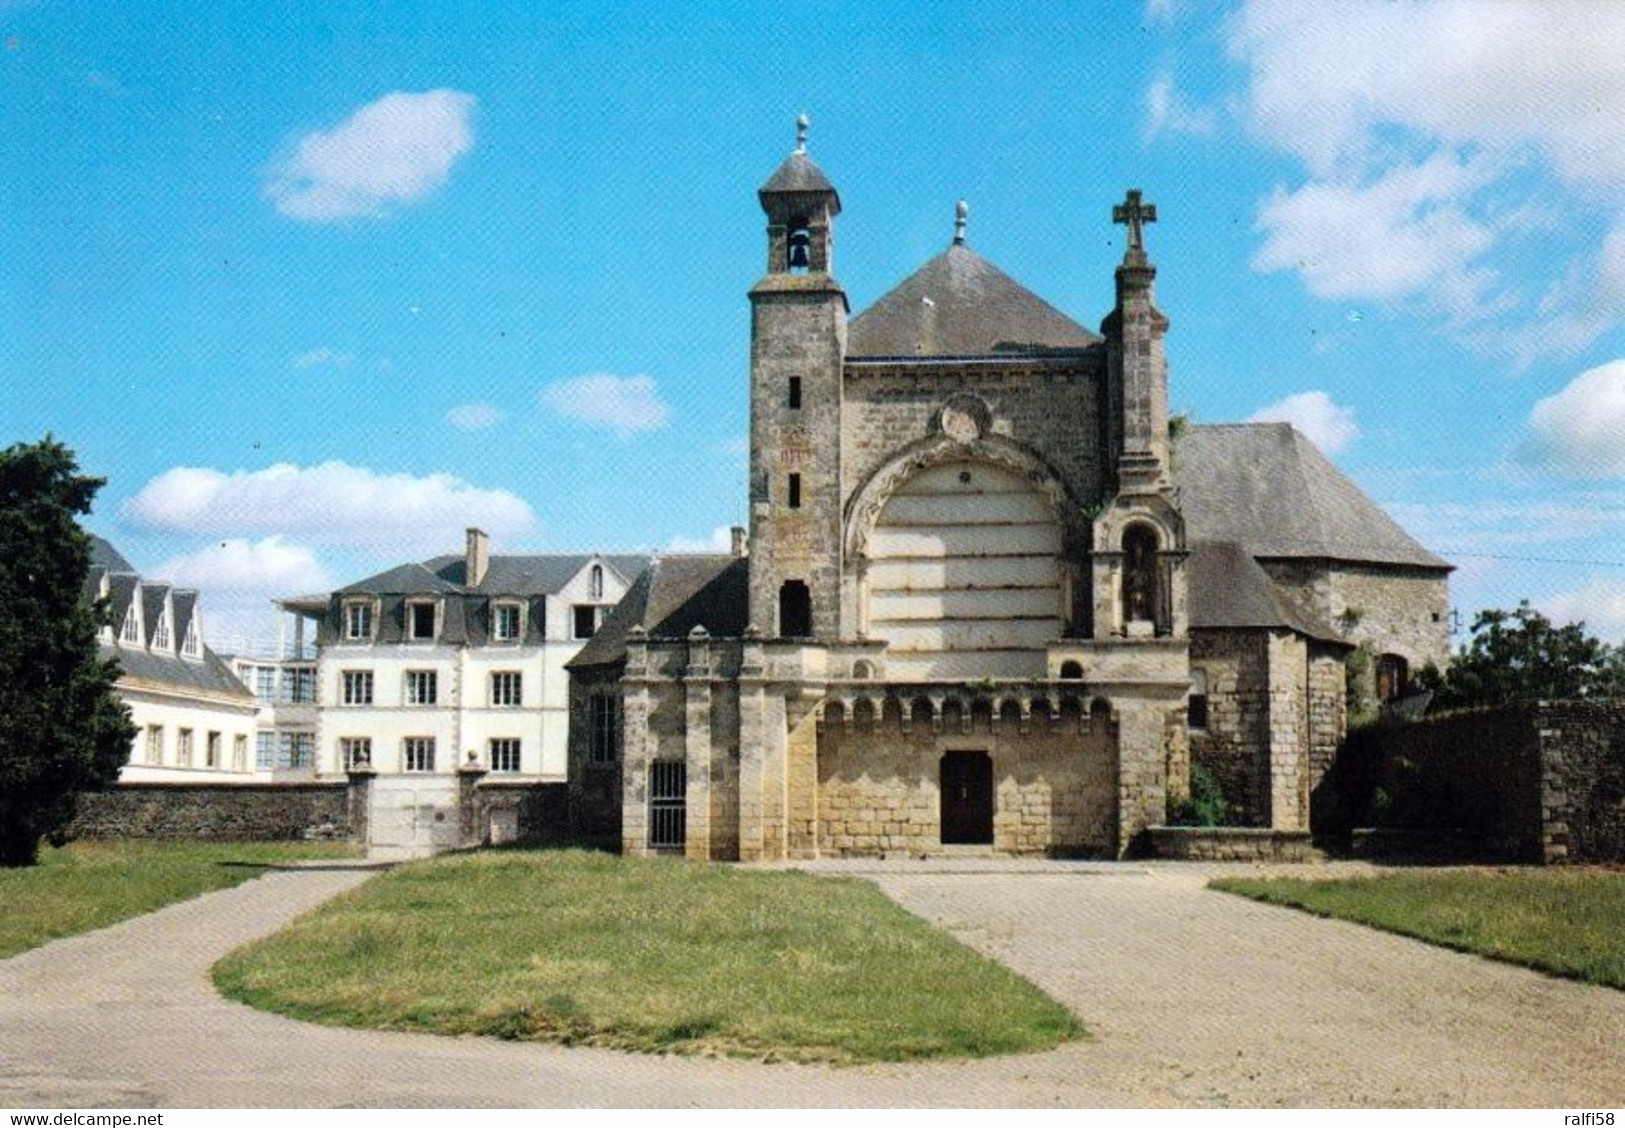 3 AK Frankreich * Château De Josselin - Loggia De Saint-Martin Und Die Historische Altstadt Von Josselin * - Josselin